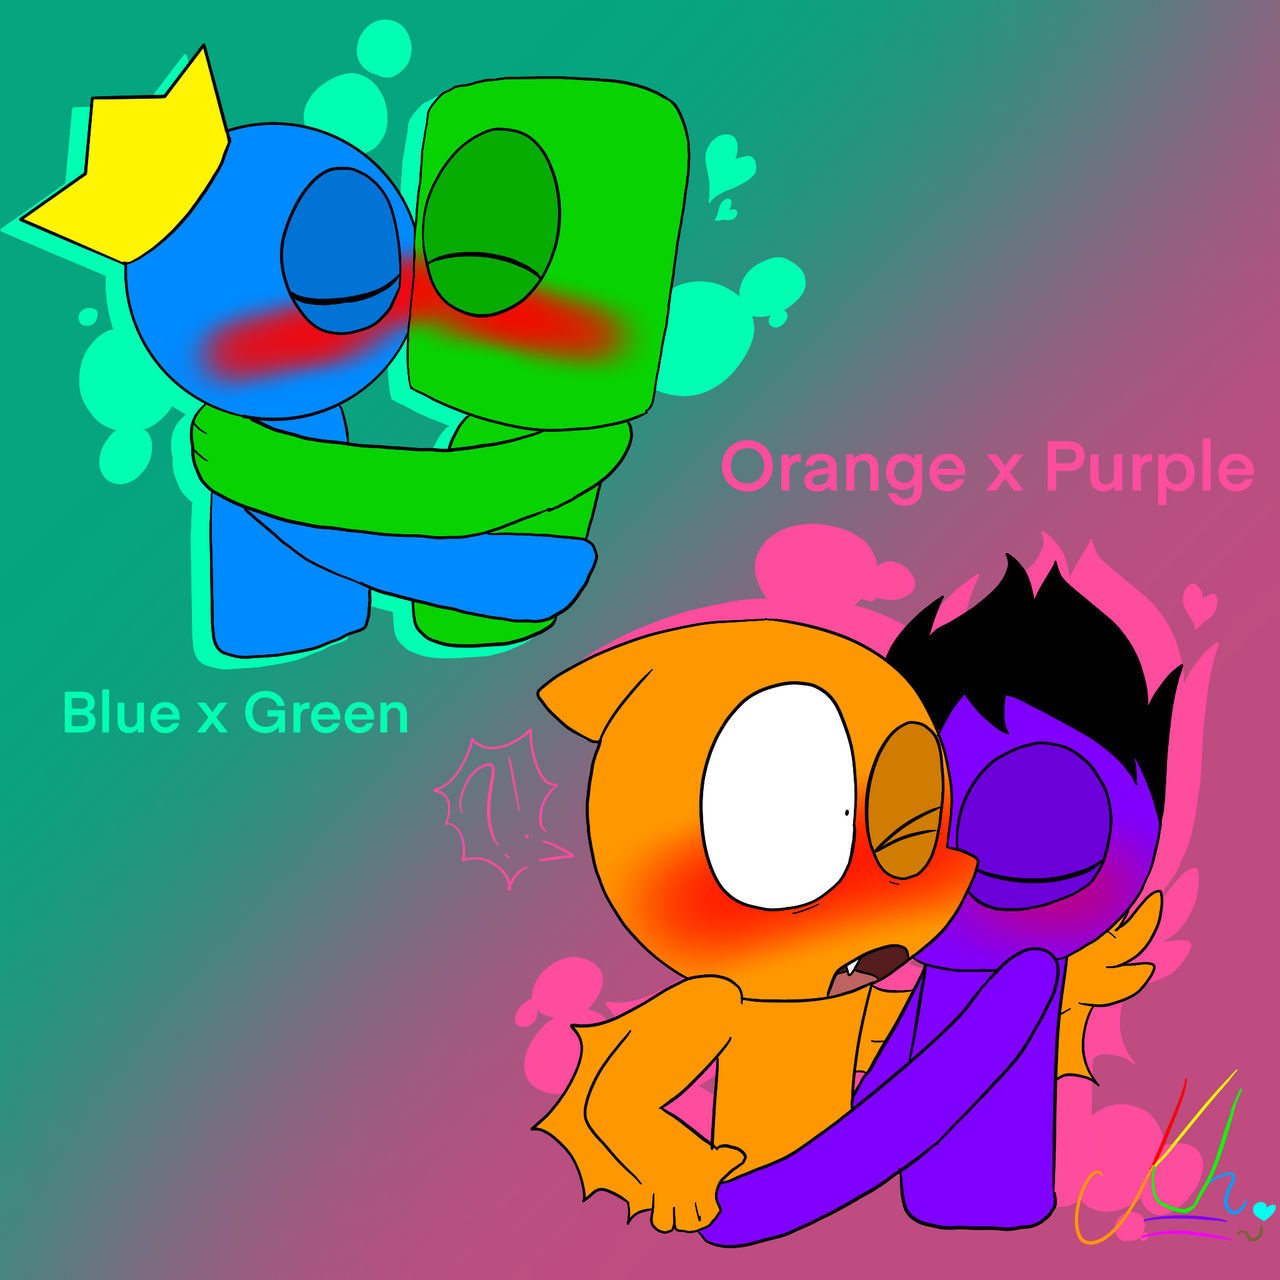 Orange x Purple be like: by KumaDraws334 on DeviantArt